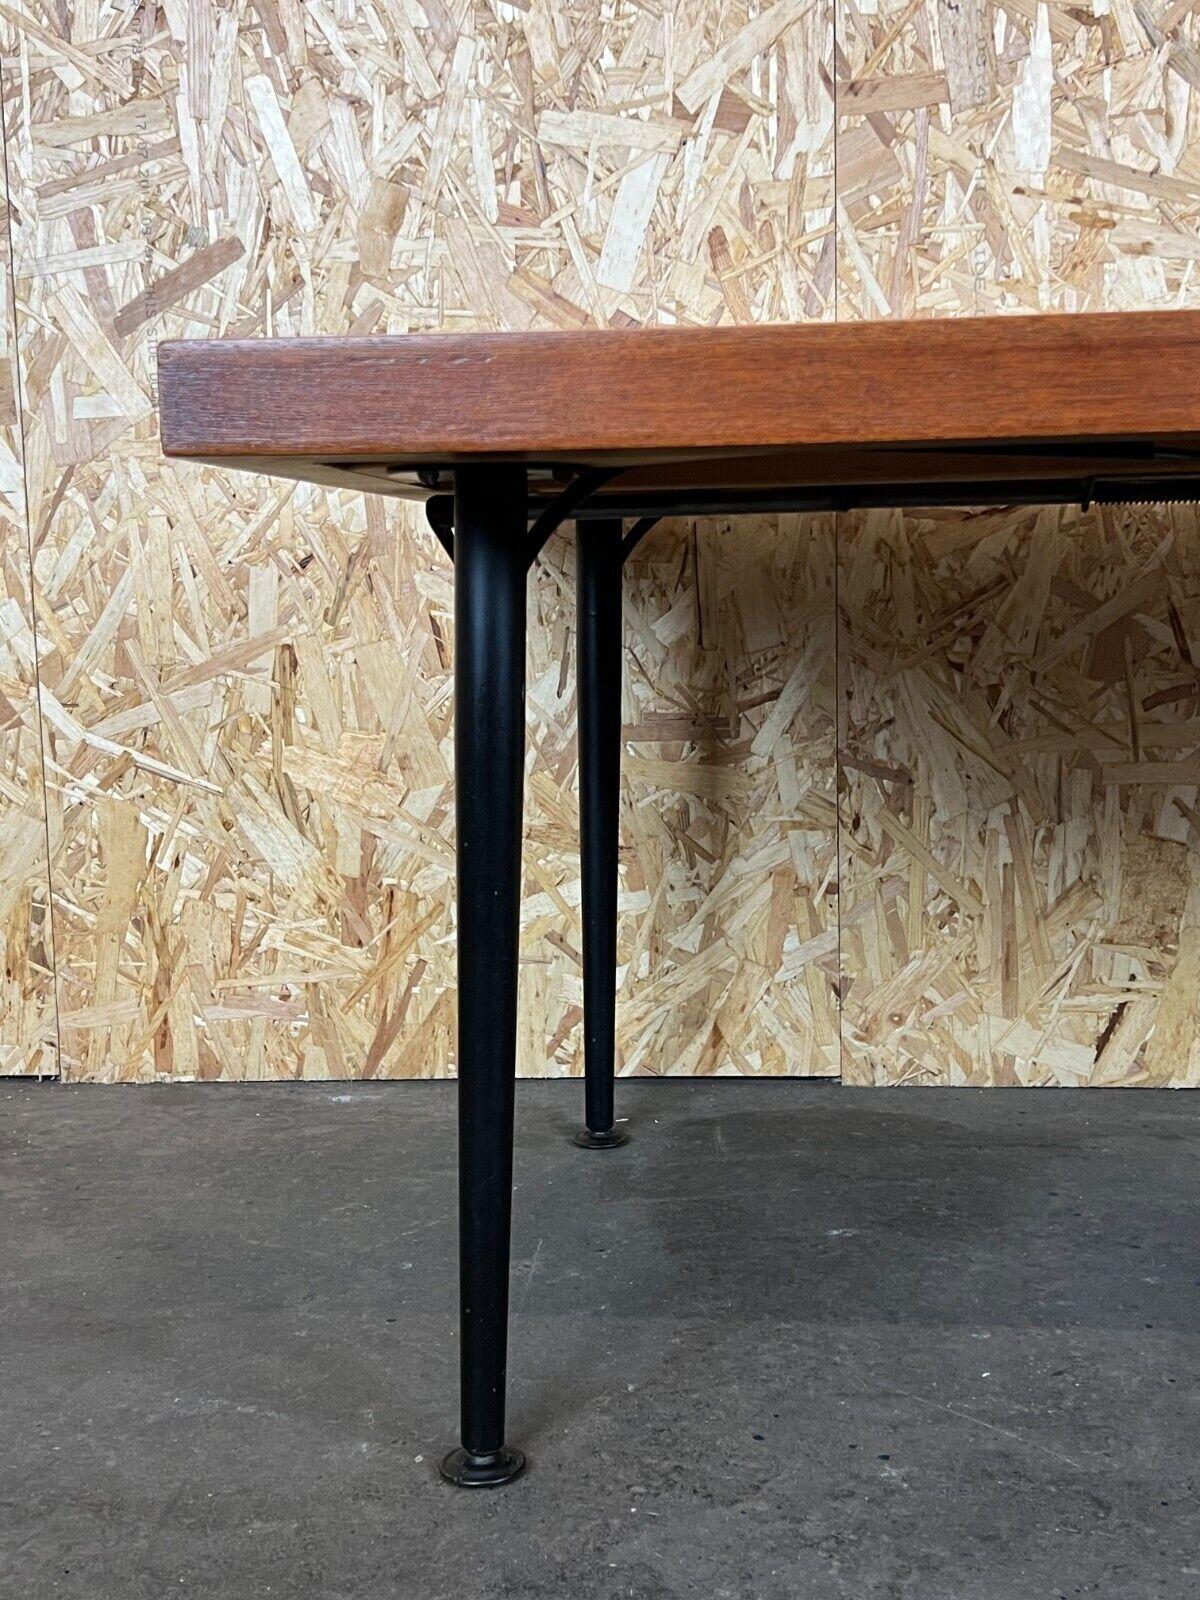 Late 20th Century 1960s-1970s Teak Coffee Table Side Table Ilse Möbel Danish Modern Design For Sale